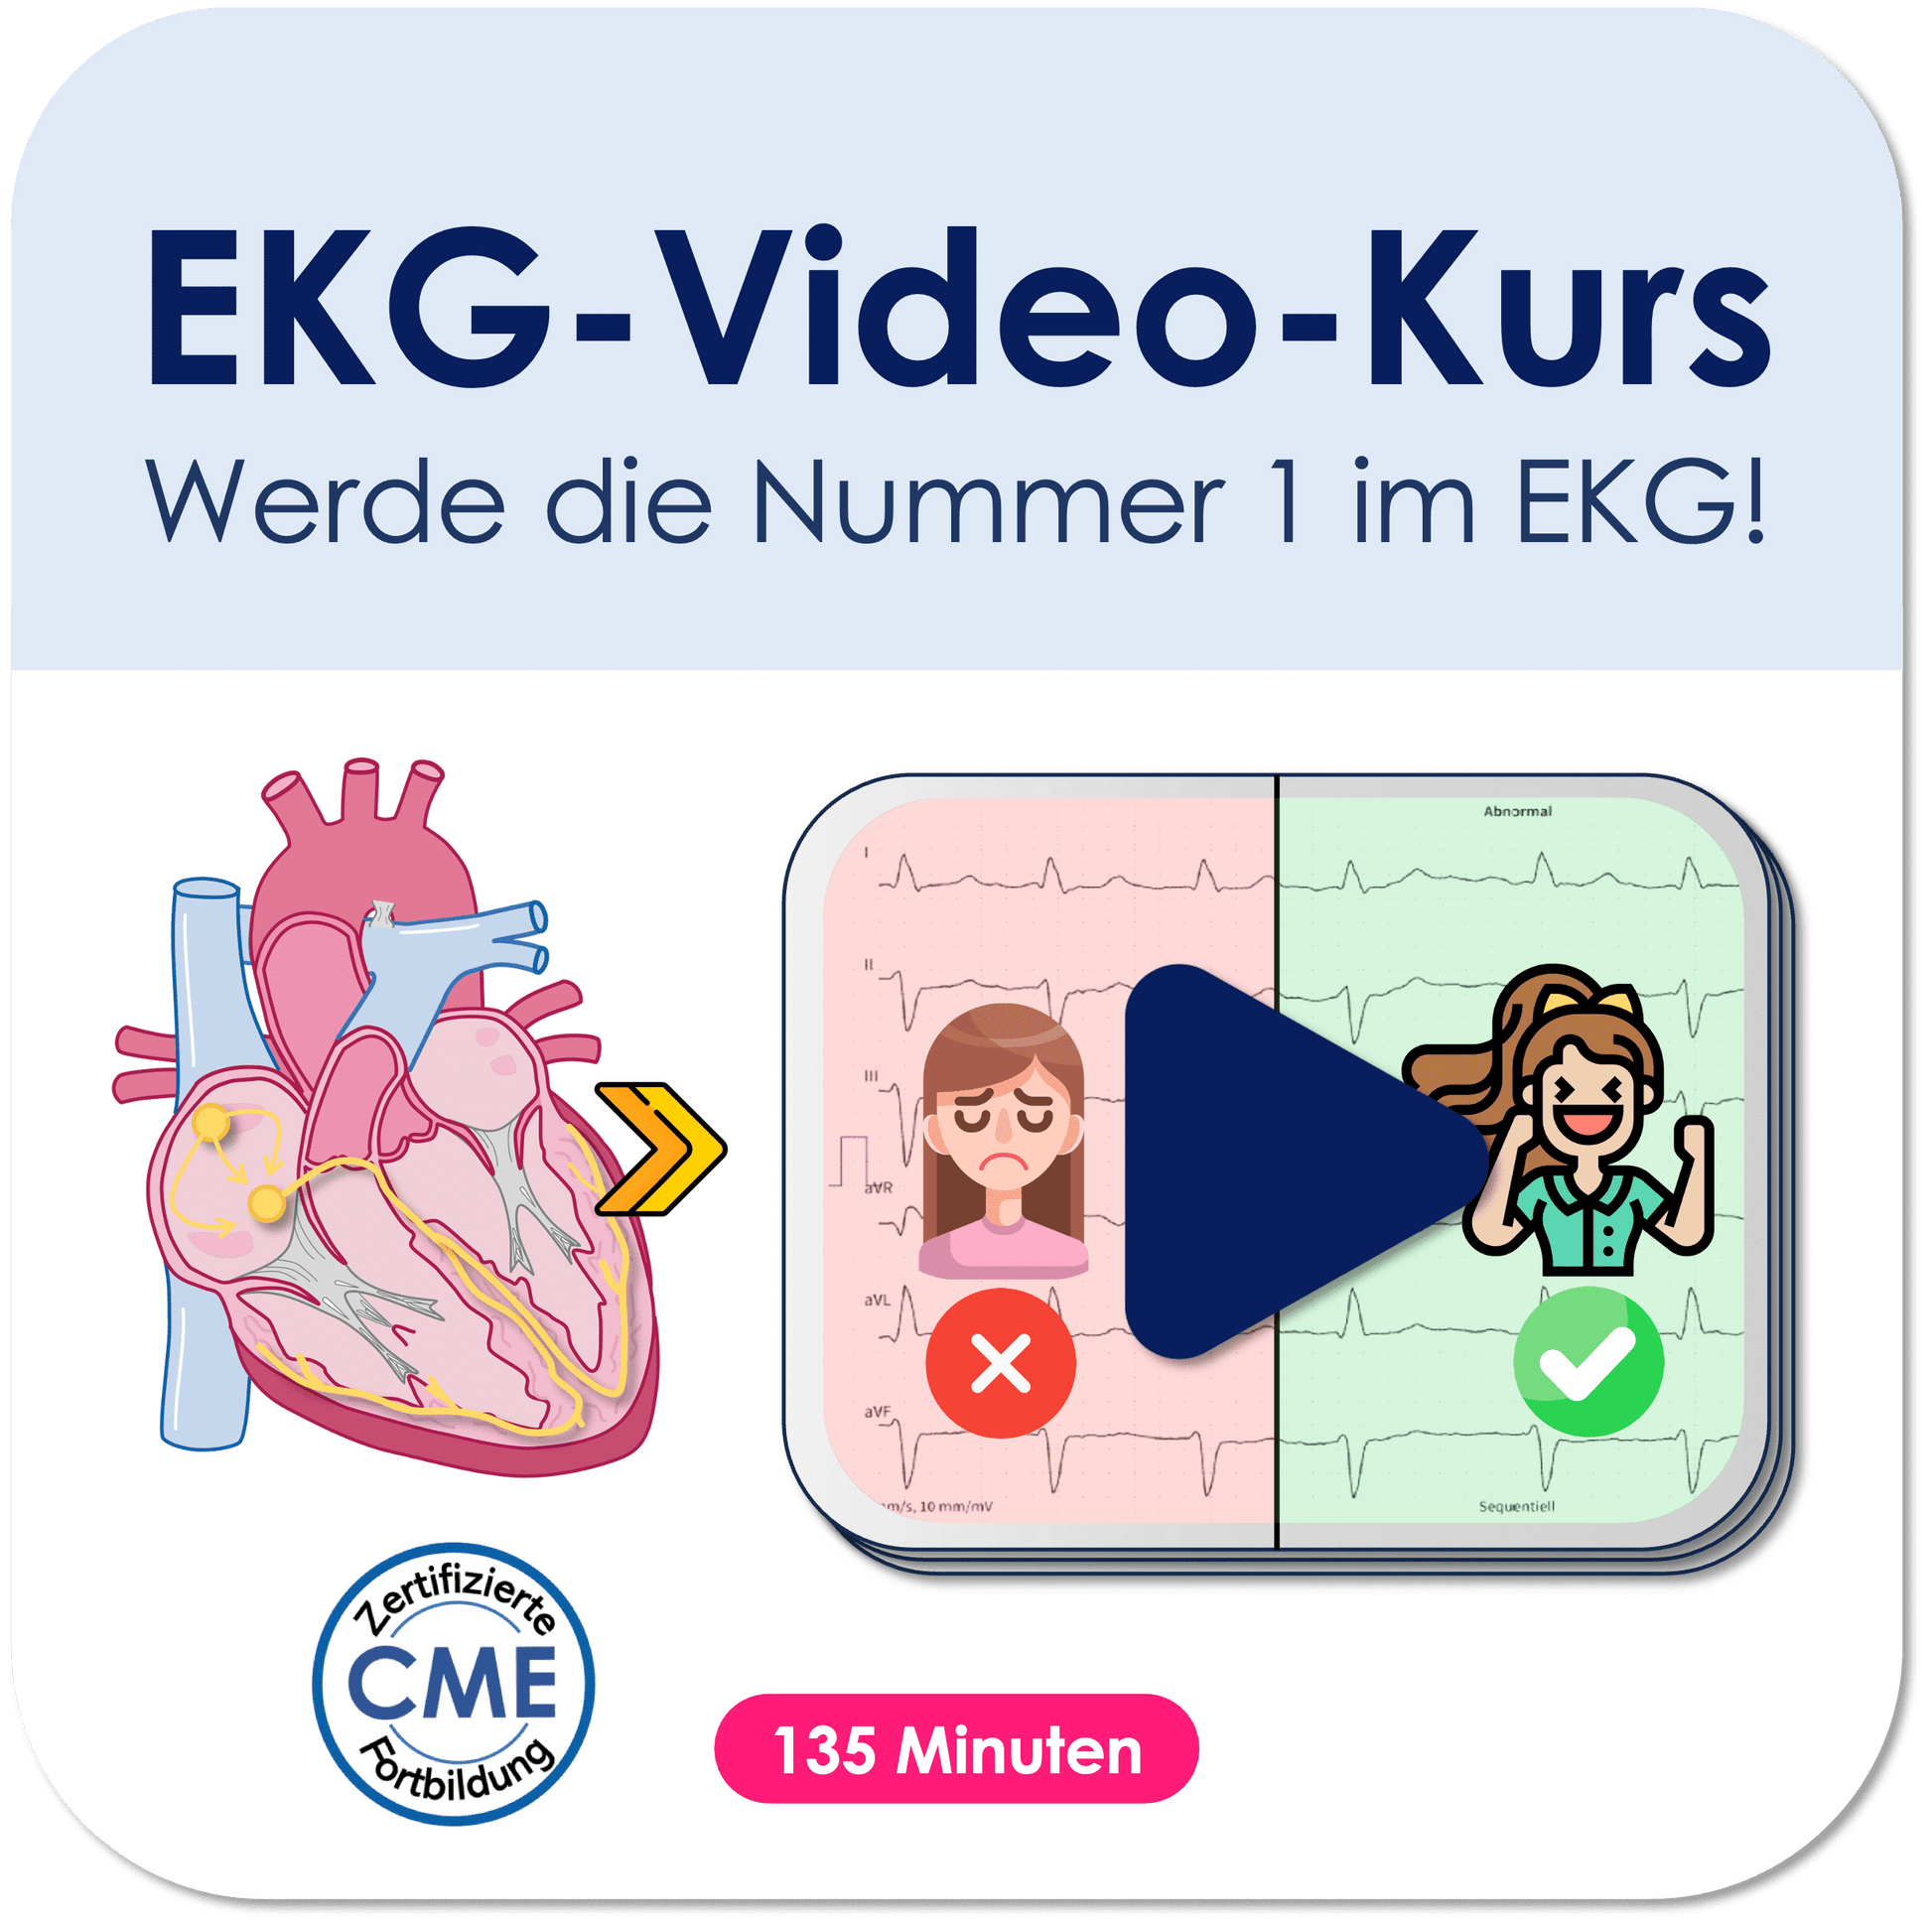 EKG-Video-Kurs (CME-zertifiziert) Video Medi Know 